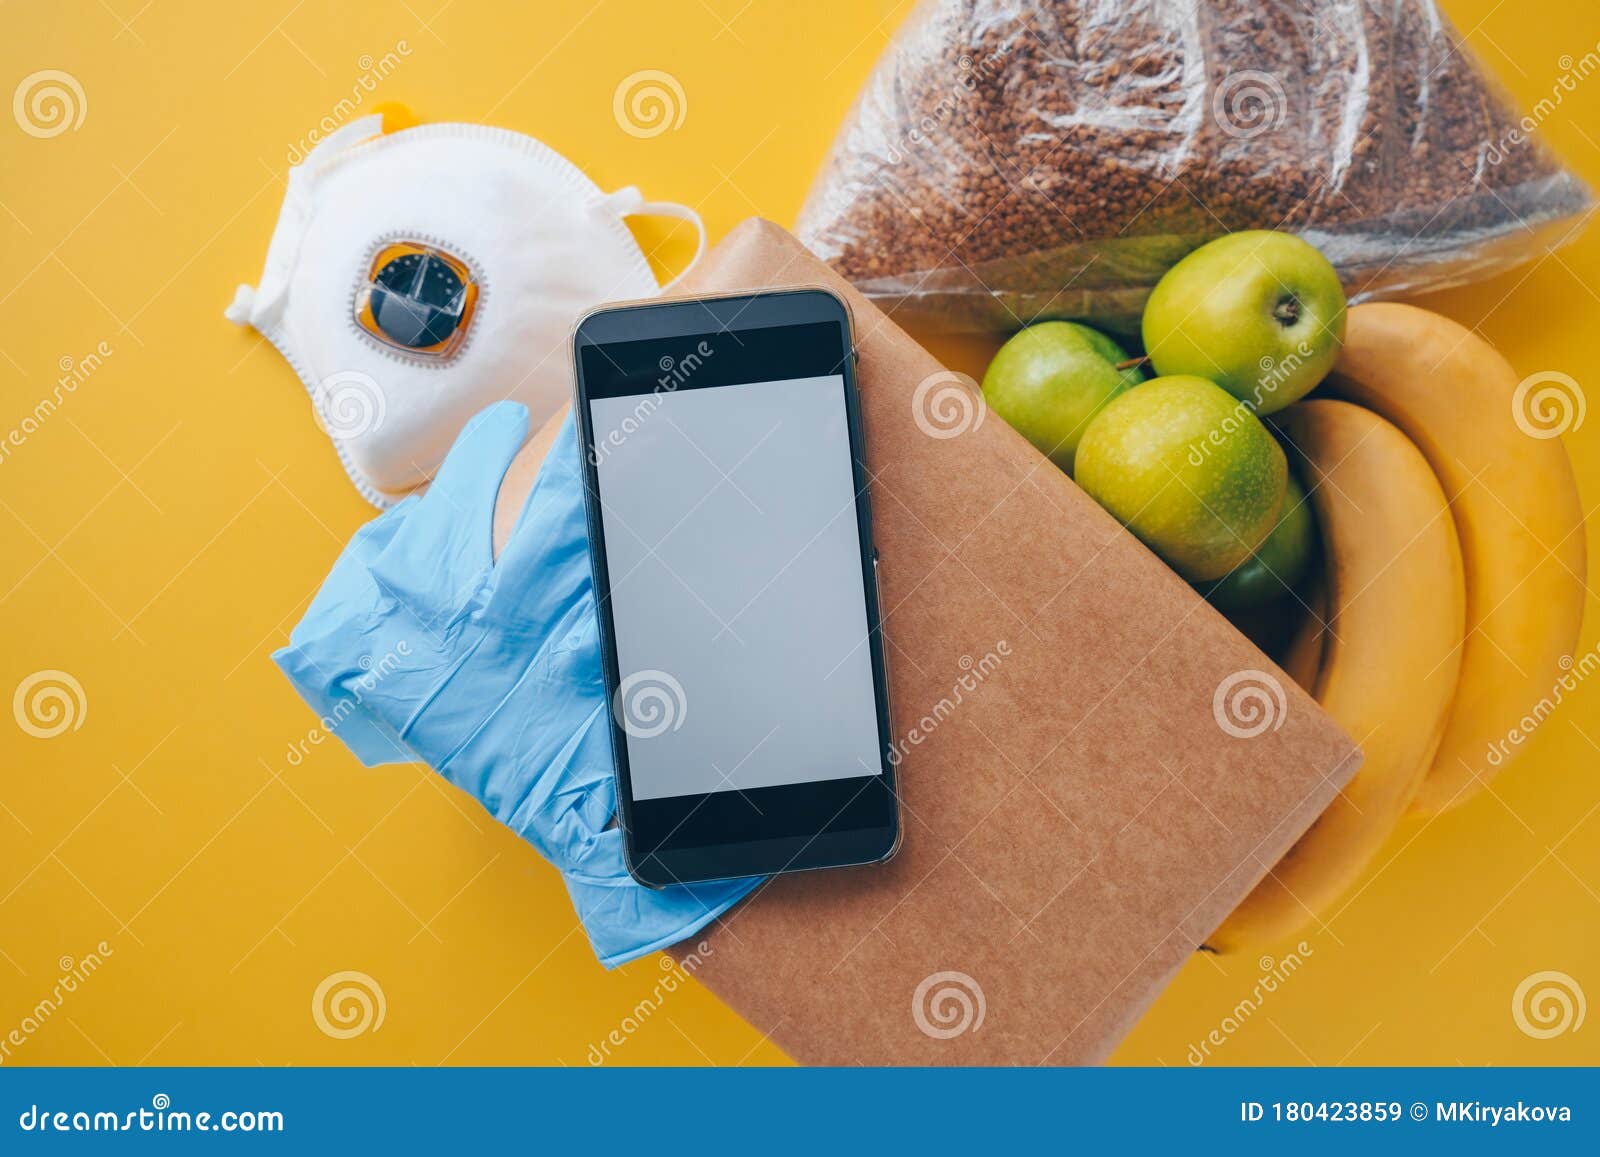 Download Food, Mockup Phone Screen, Box, Protective Gloves And Mask ...